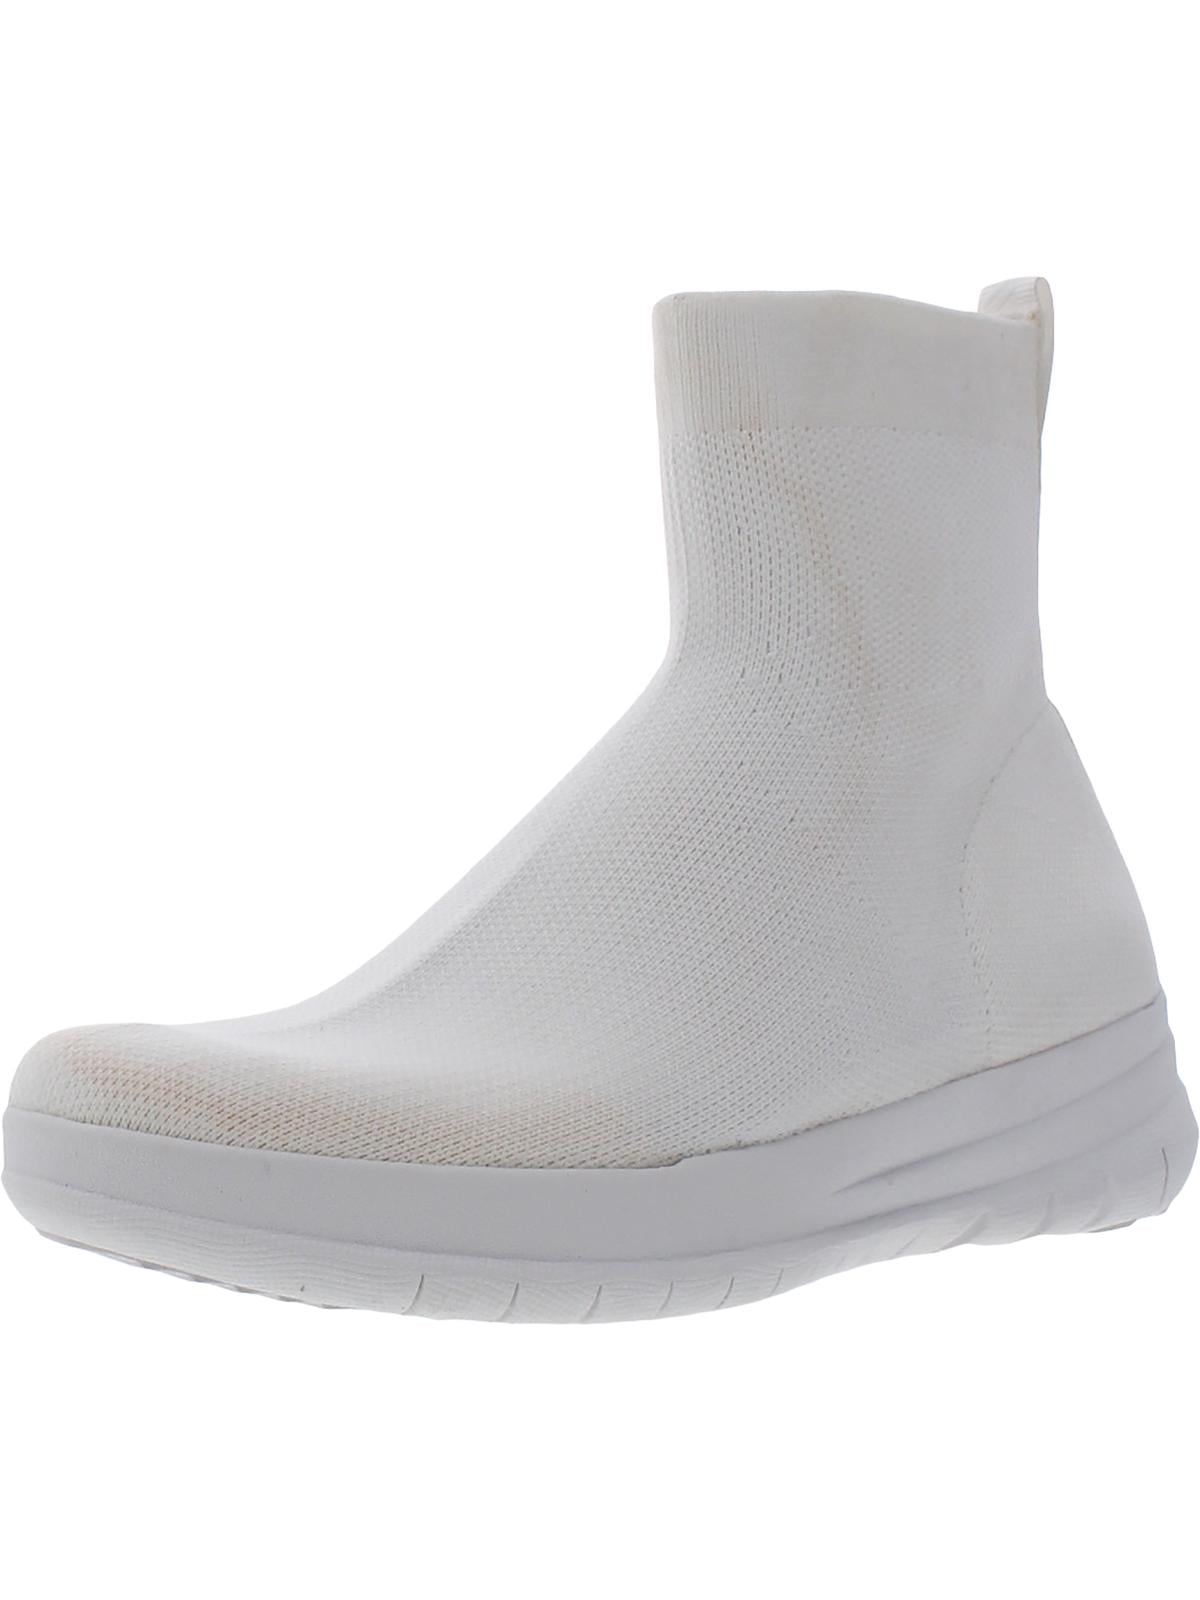 Extra Wide Quarter Top Medic Socks 6 pair for $48.99 11/16, White 